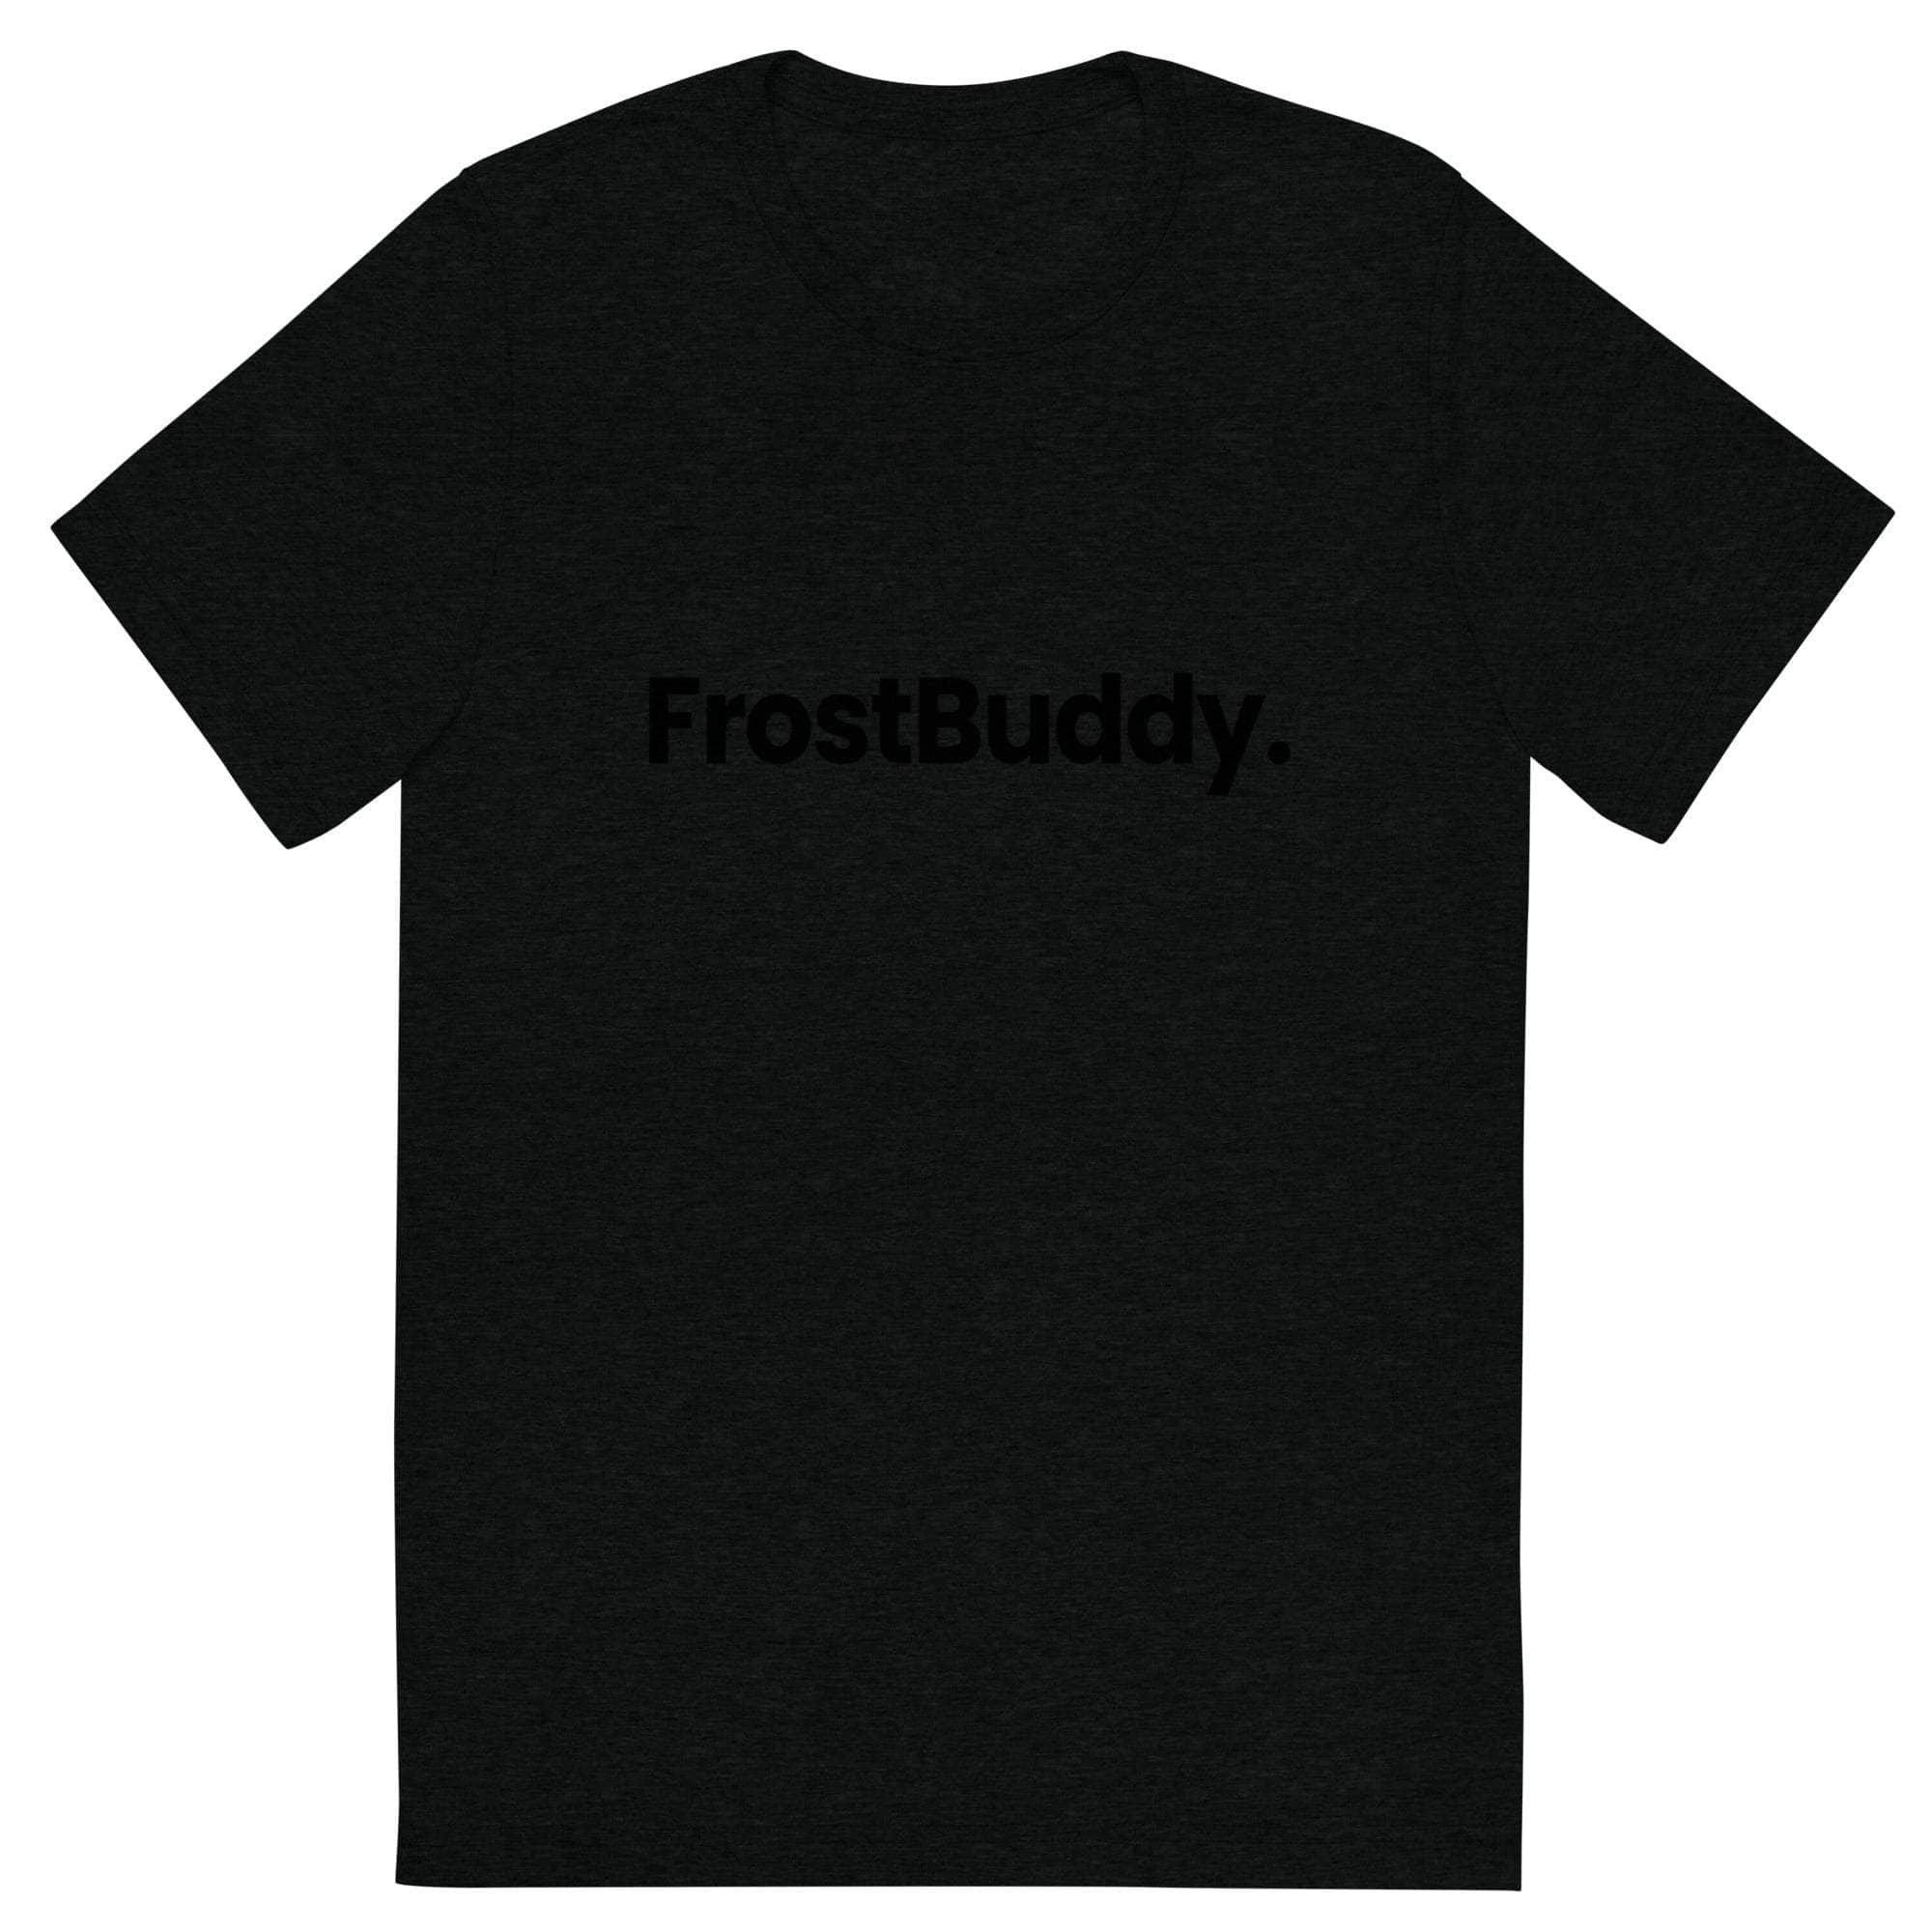 Frost Buddy  Solid Black Triblend / XS Logo Short Sleeve T-shirt